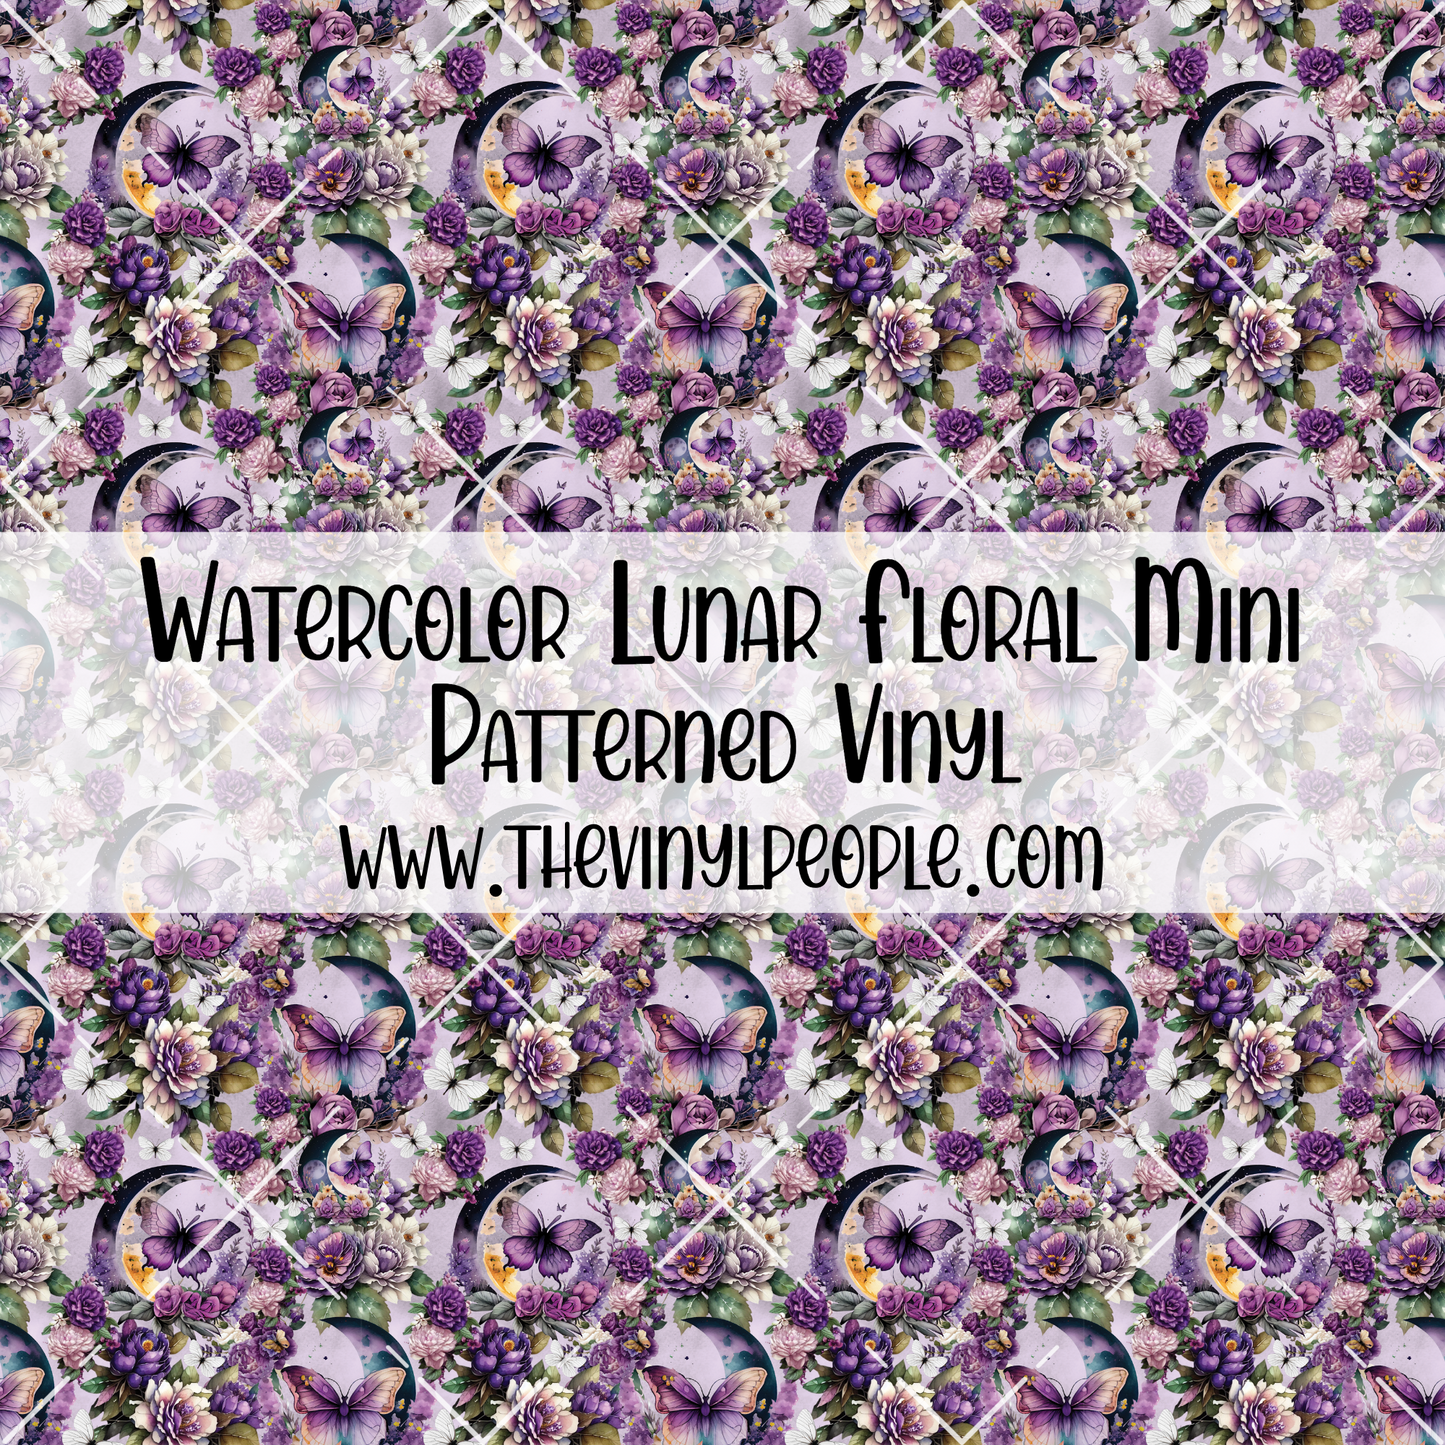 Watercolor Lunar Floral Patterned Vinyl